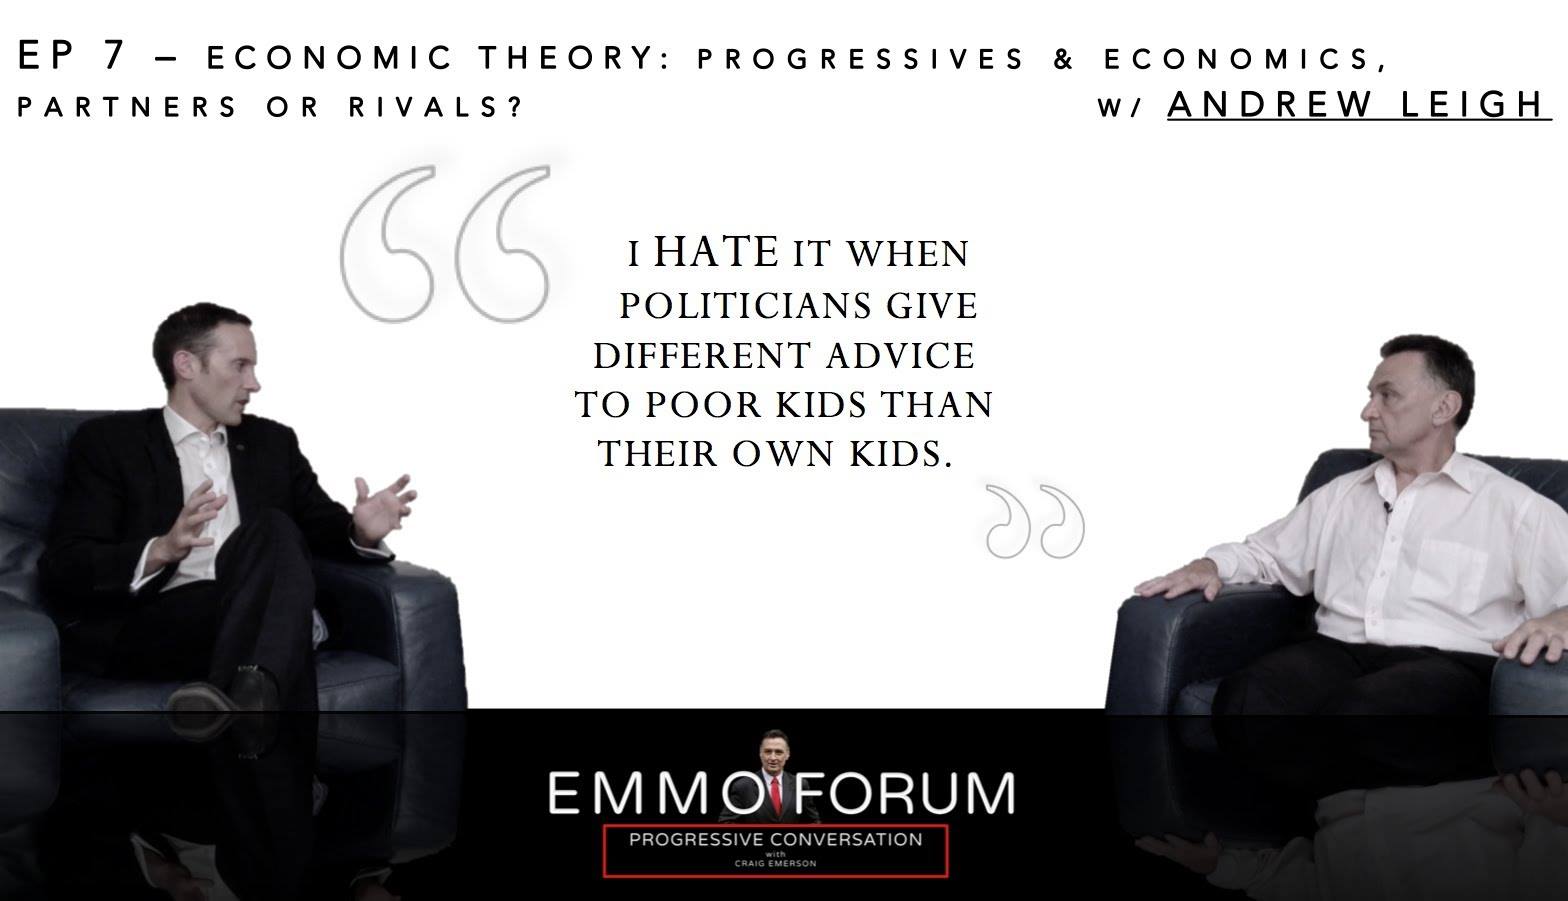 Discussing Politics and Economics with Craig Emerson